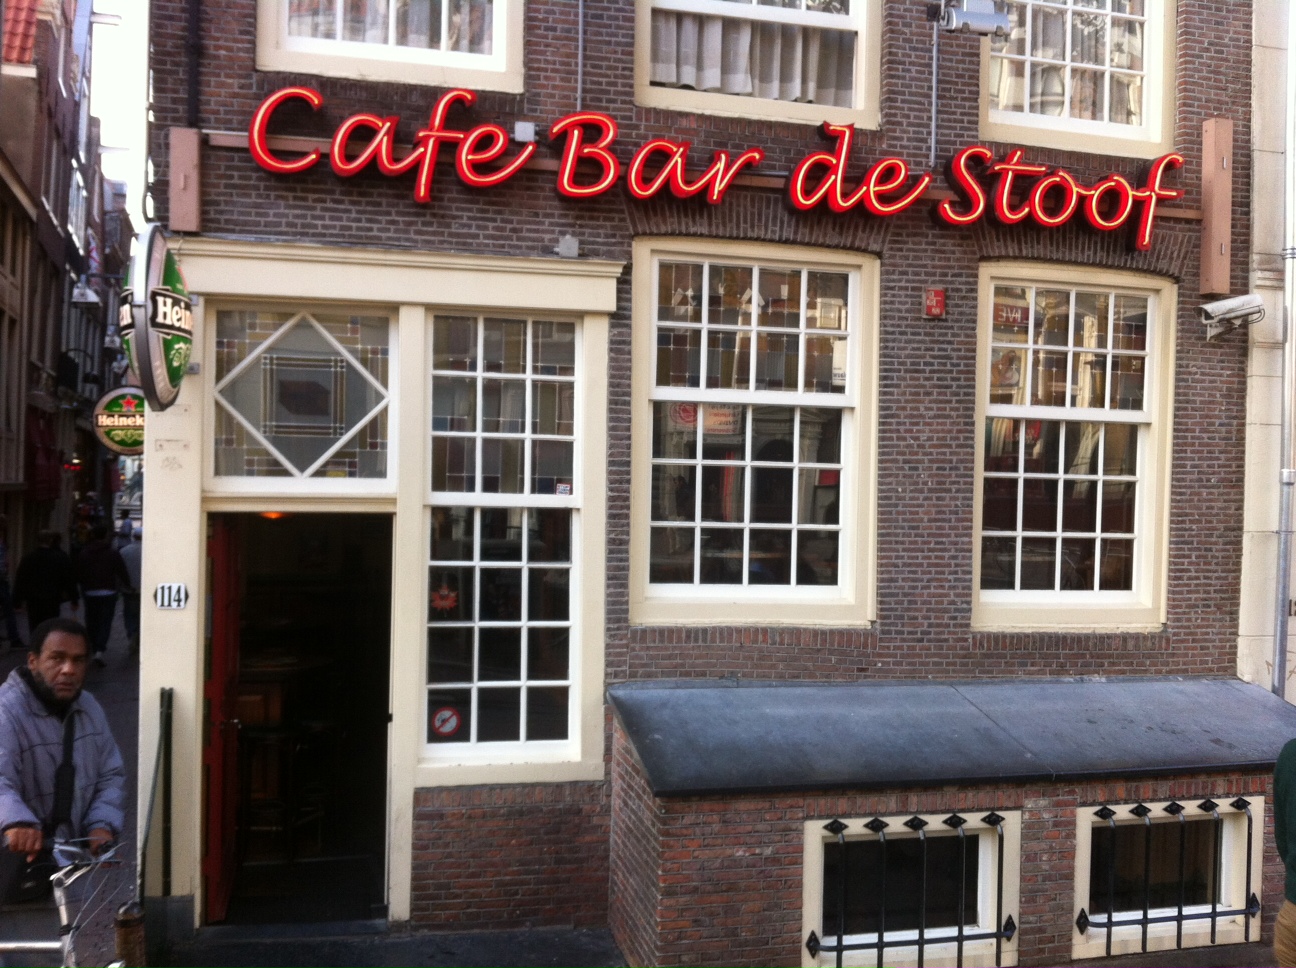 Café Bar de Stoof - Fonts In Use